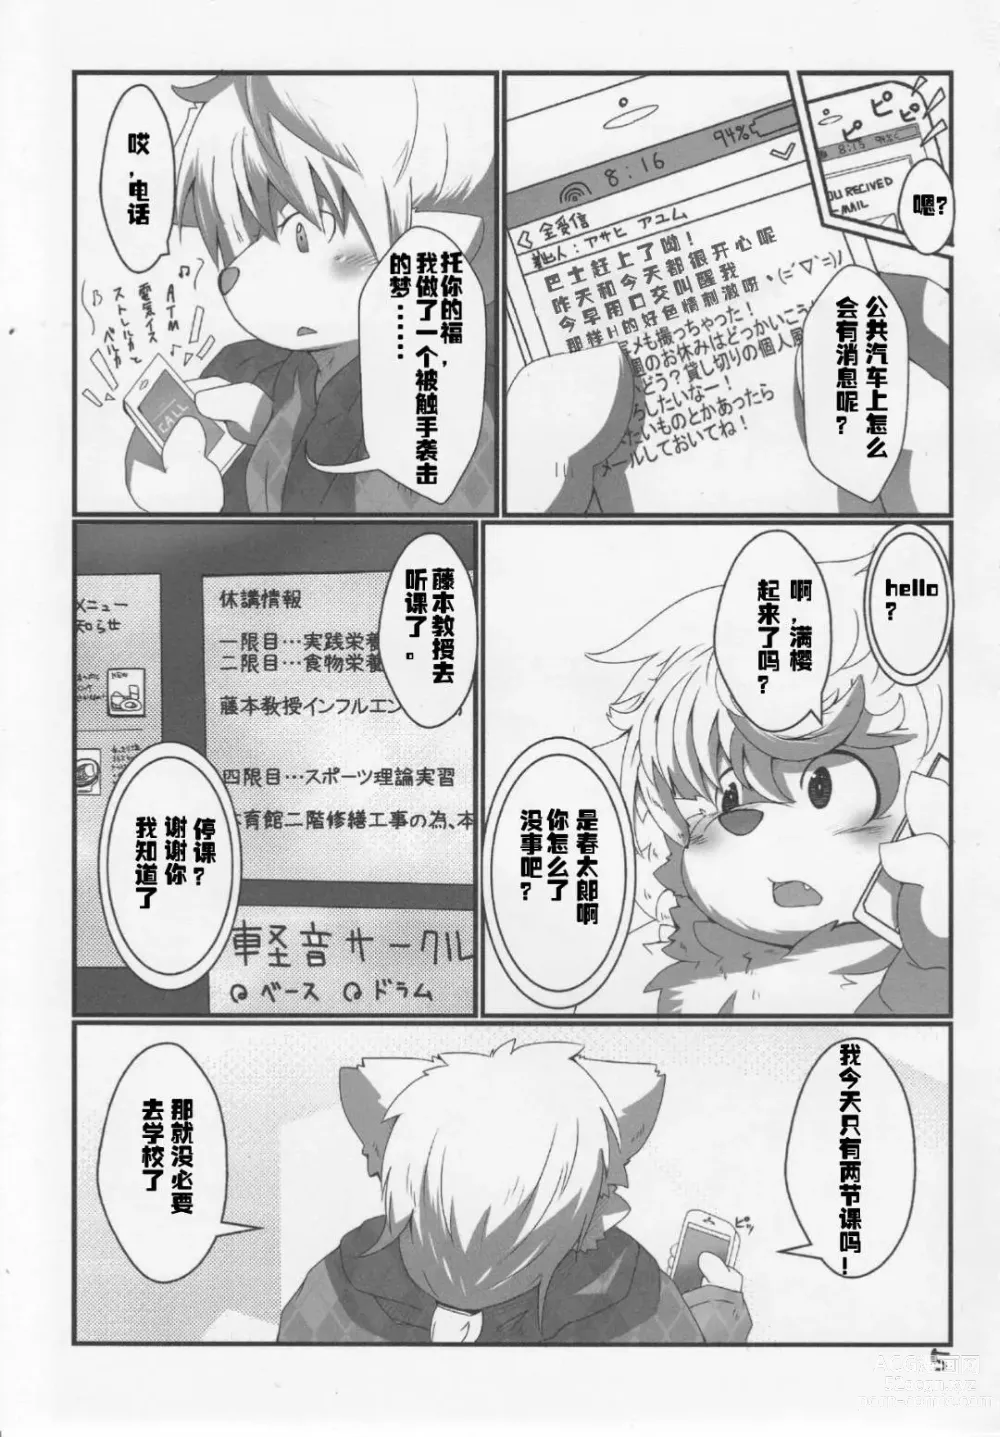 Page 6 of doujinshi 满樱与步梦